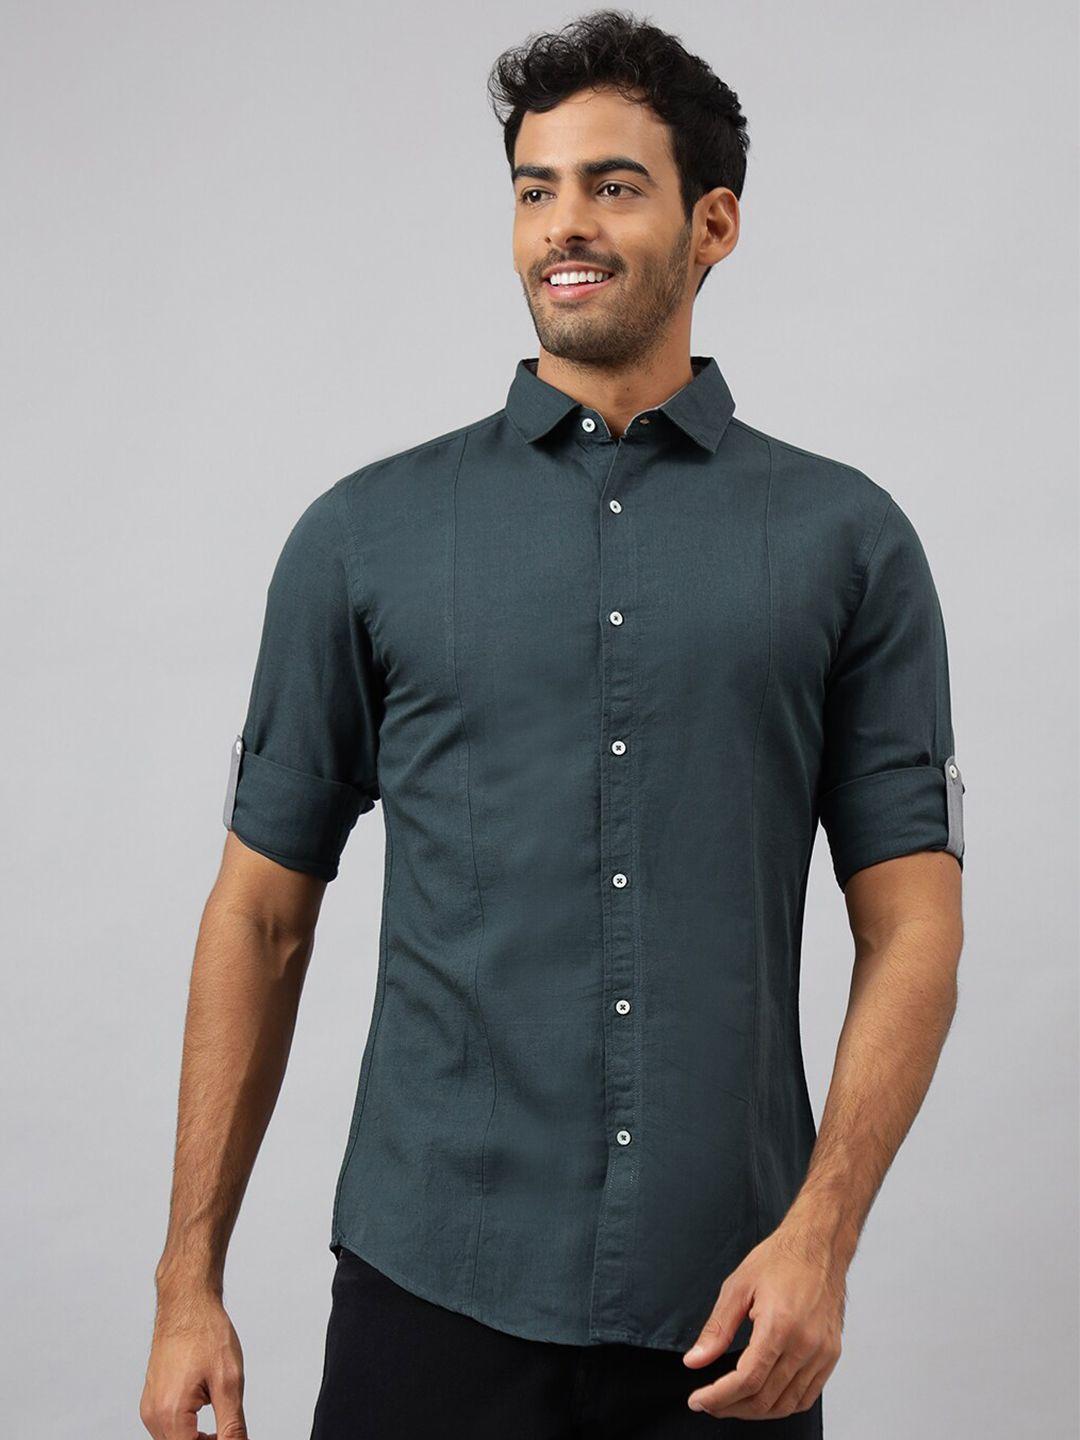 mr-button-men-charcoal-slim-fit-casual-shirt